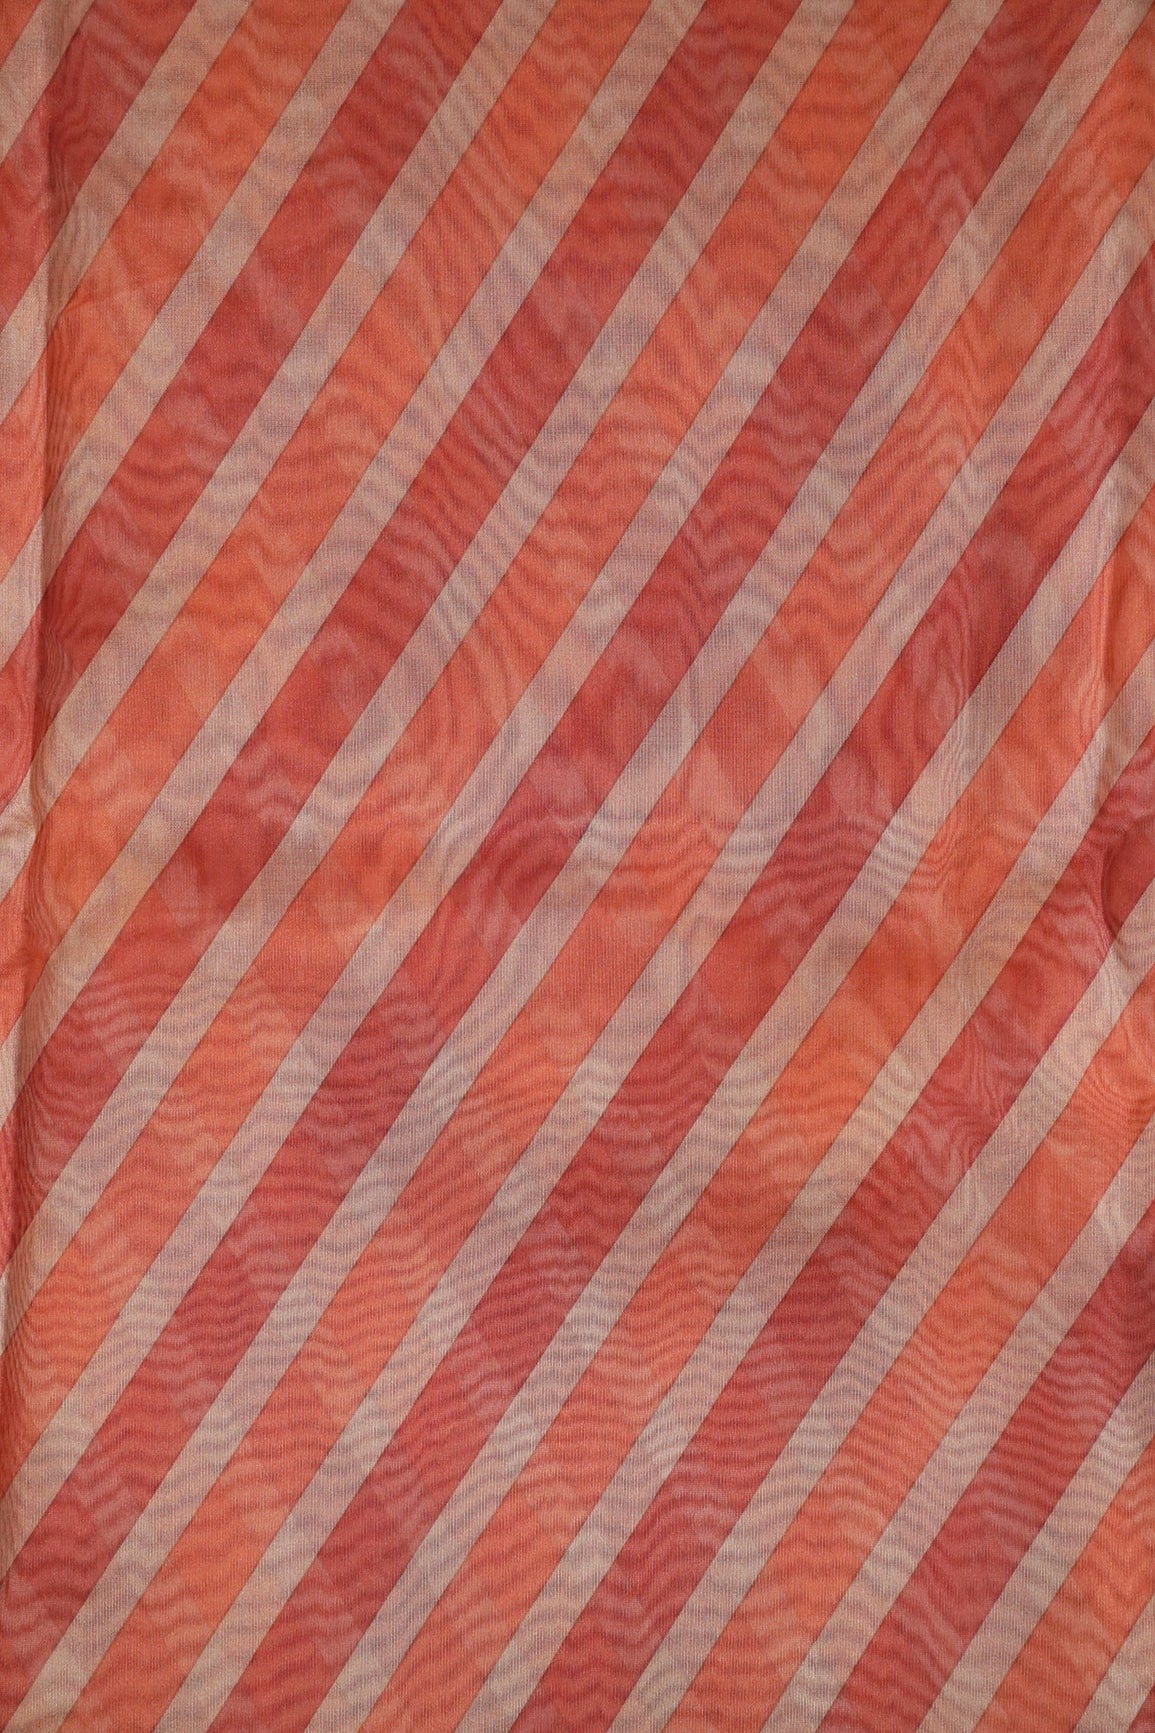 doeraa Prints Maroon And Orange Stripes Digital Print On Organza Fabric